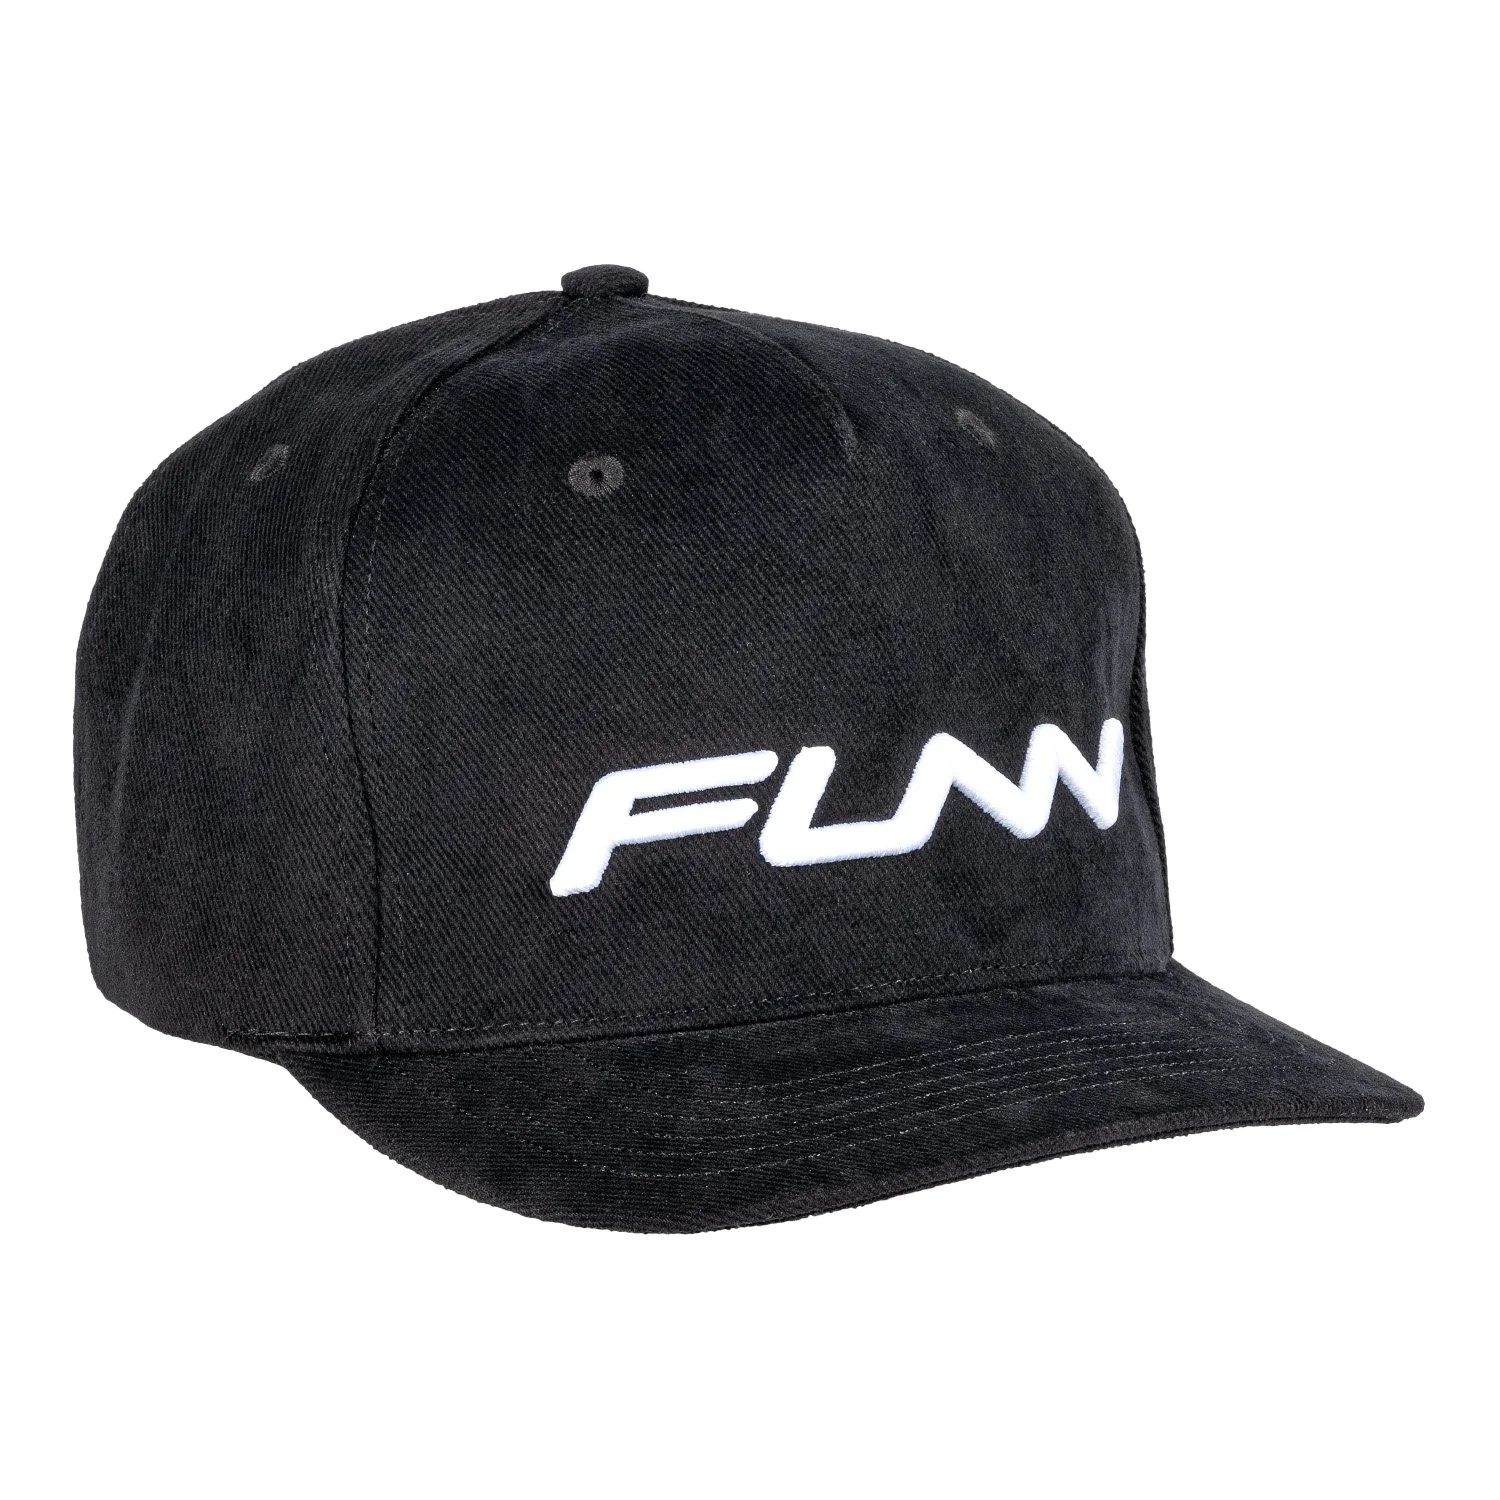 FUNN Logo cap - black